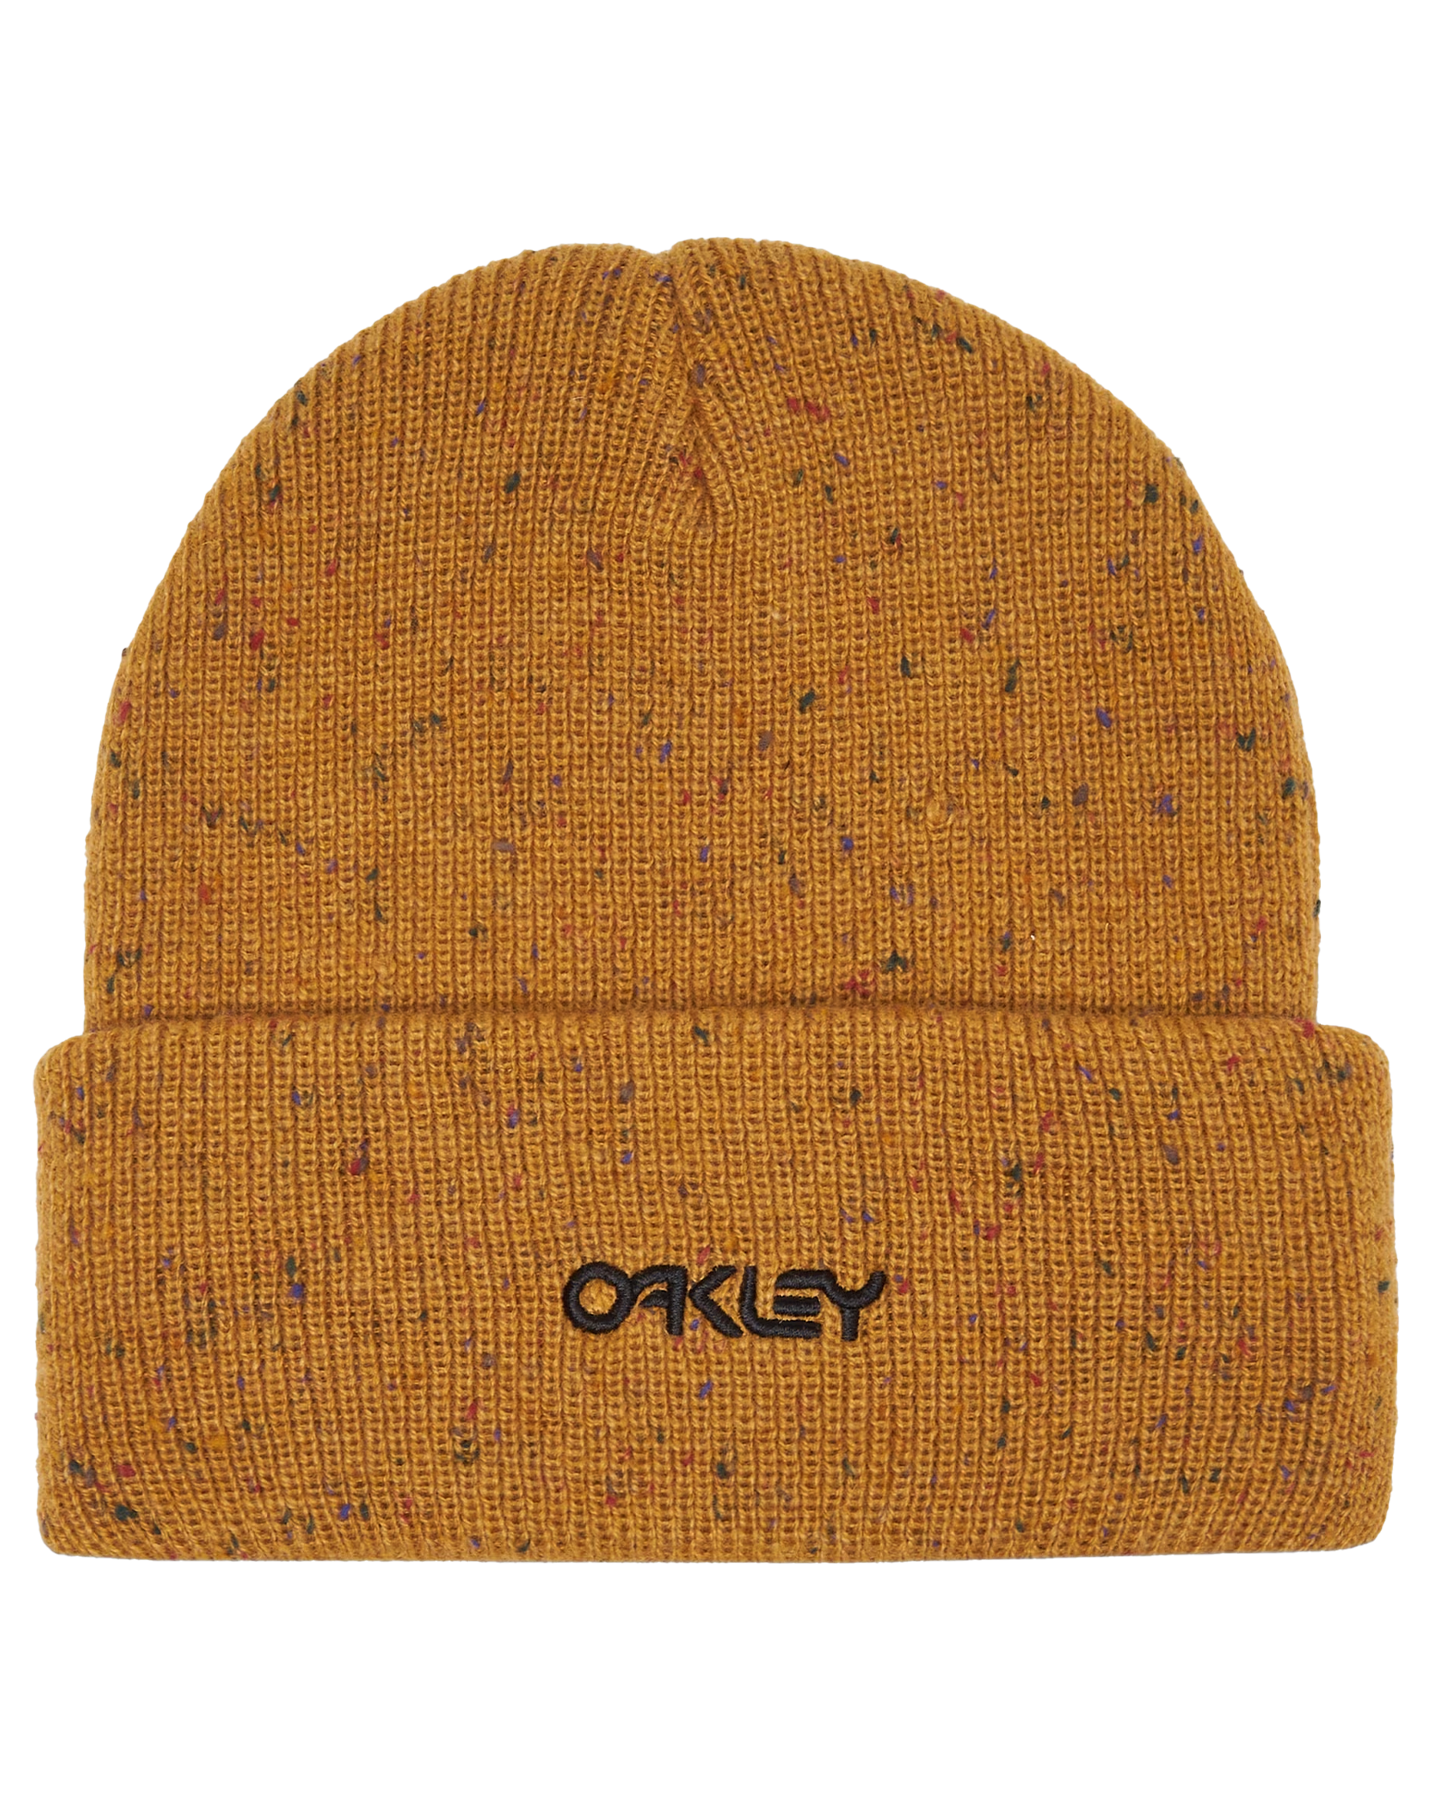 Oakley B1B Speckled Beanie - Amber Yellow Beanies - Trojan Wake Ski Snow